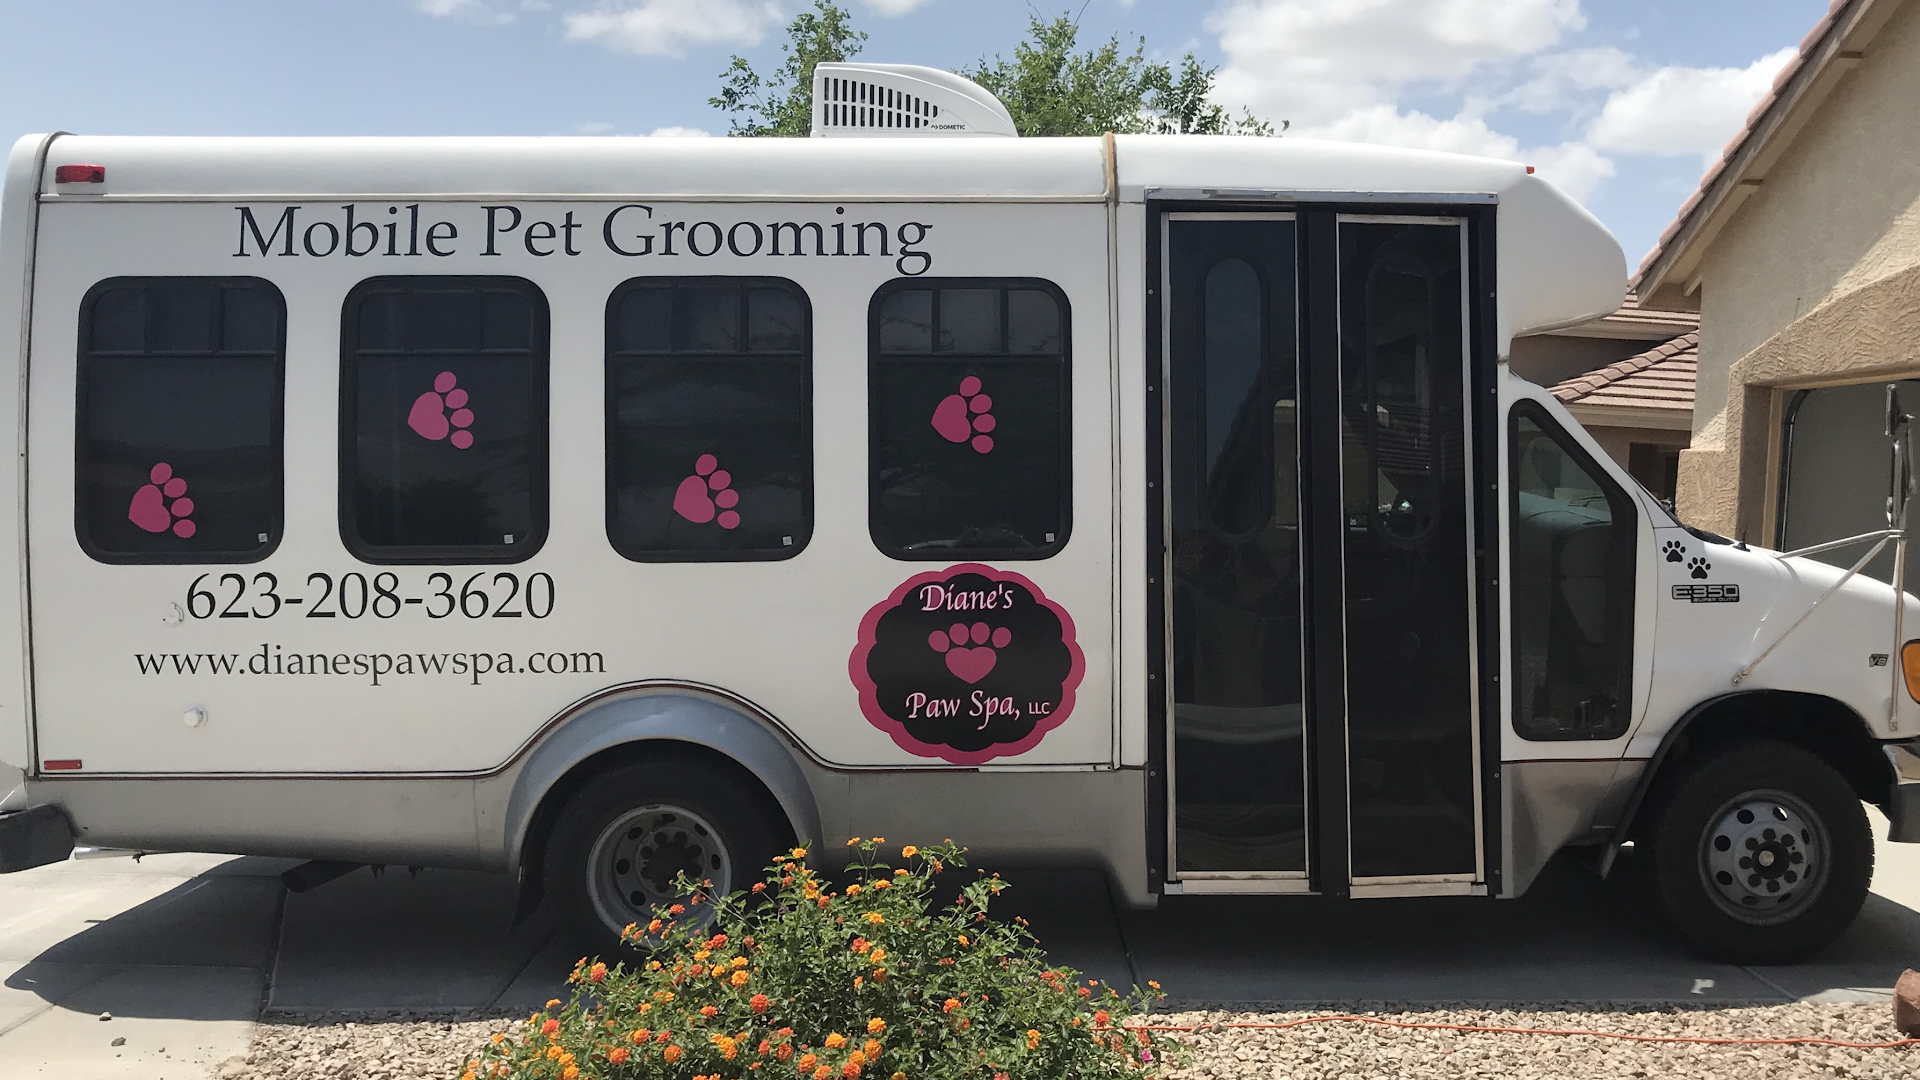 Diane’s Paw Spa, Mobile Pet Grooming